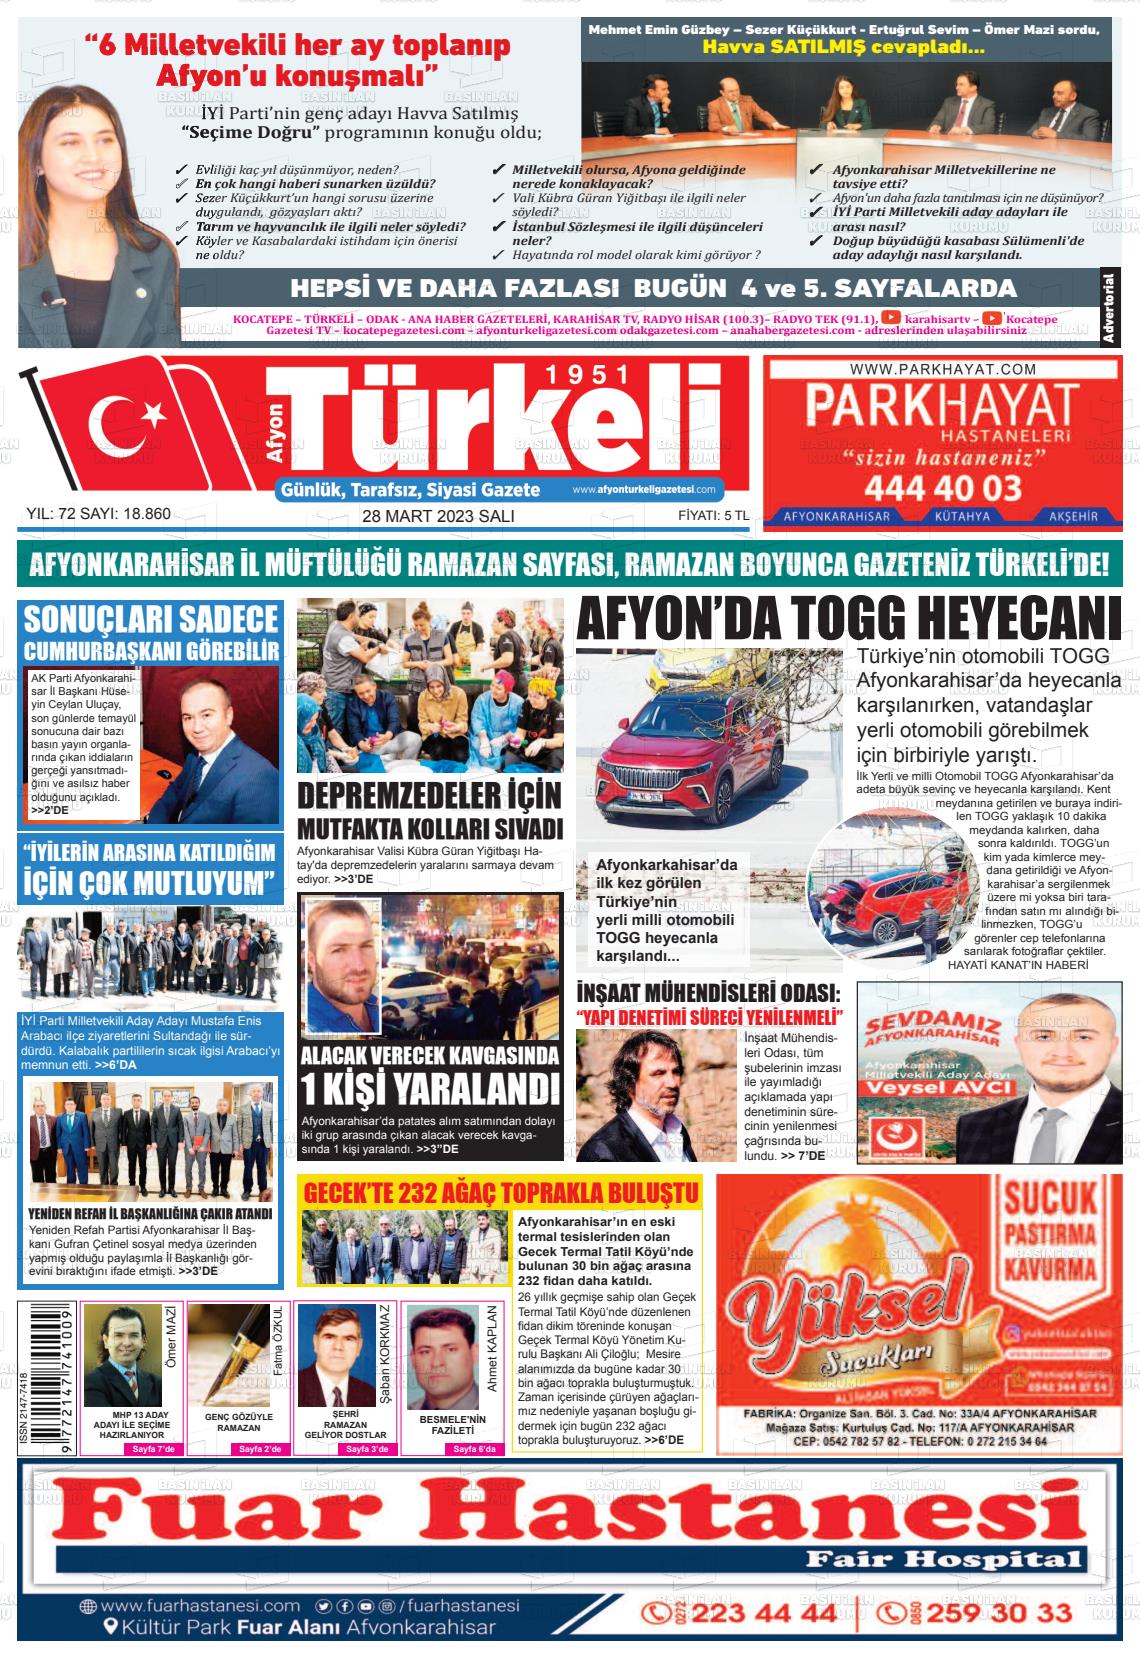 28 Mart 2023 Afyon Türkeli Gazete Manşeti